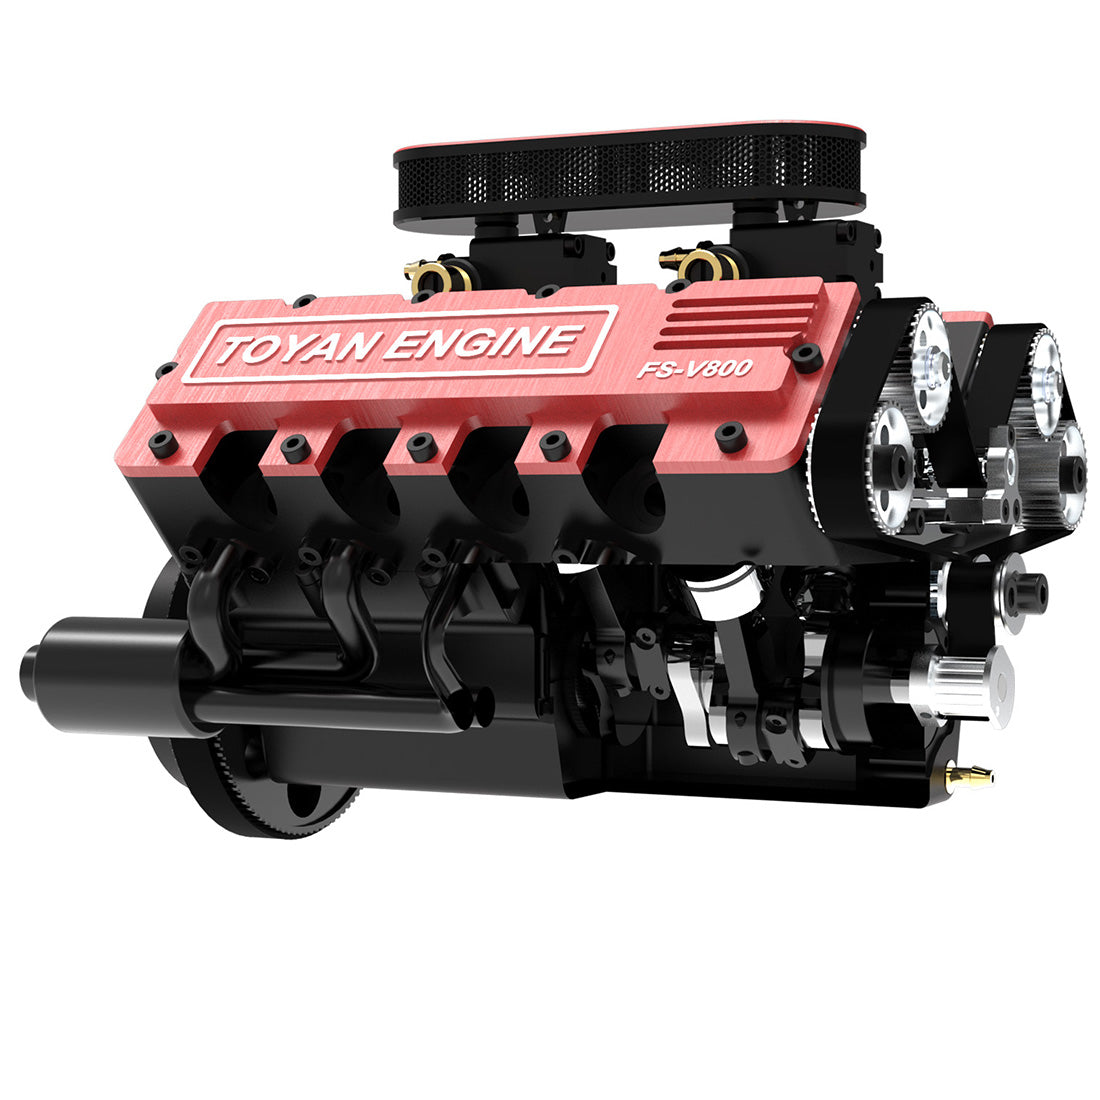 toyan v8 engine model kit